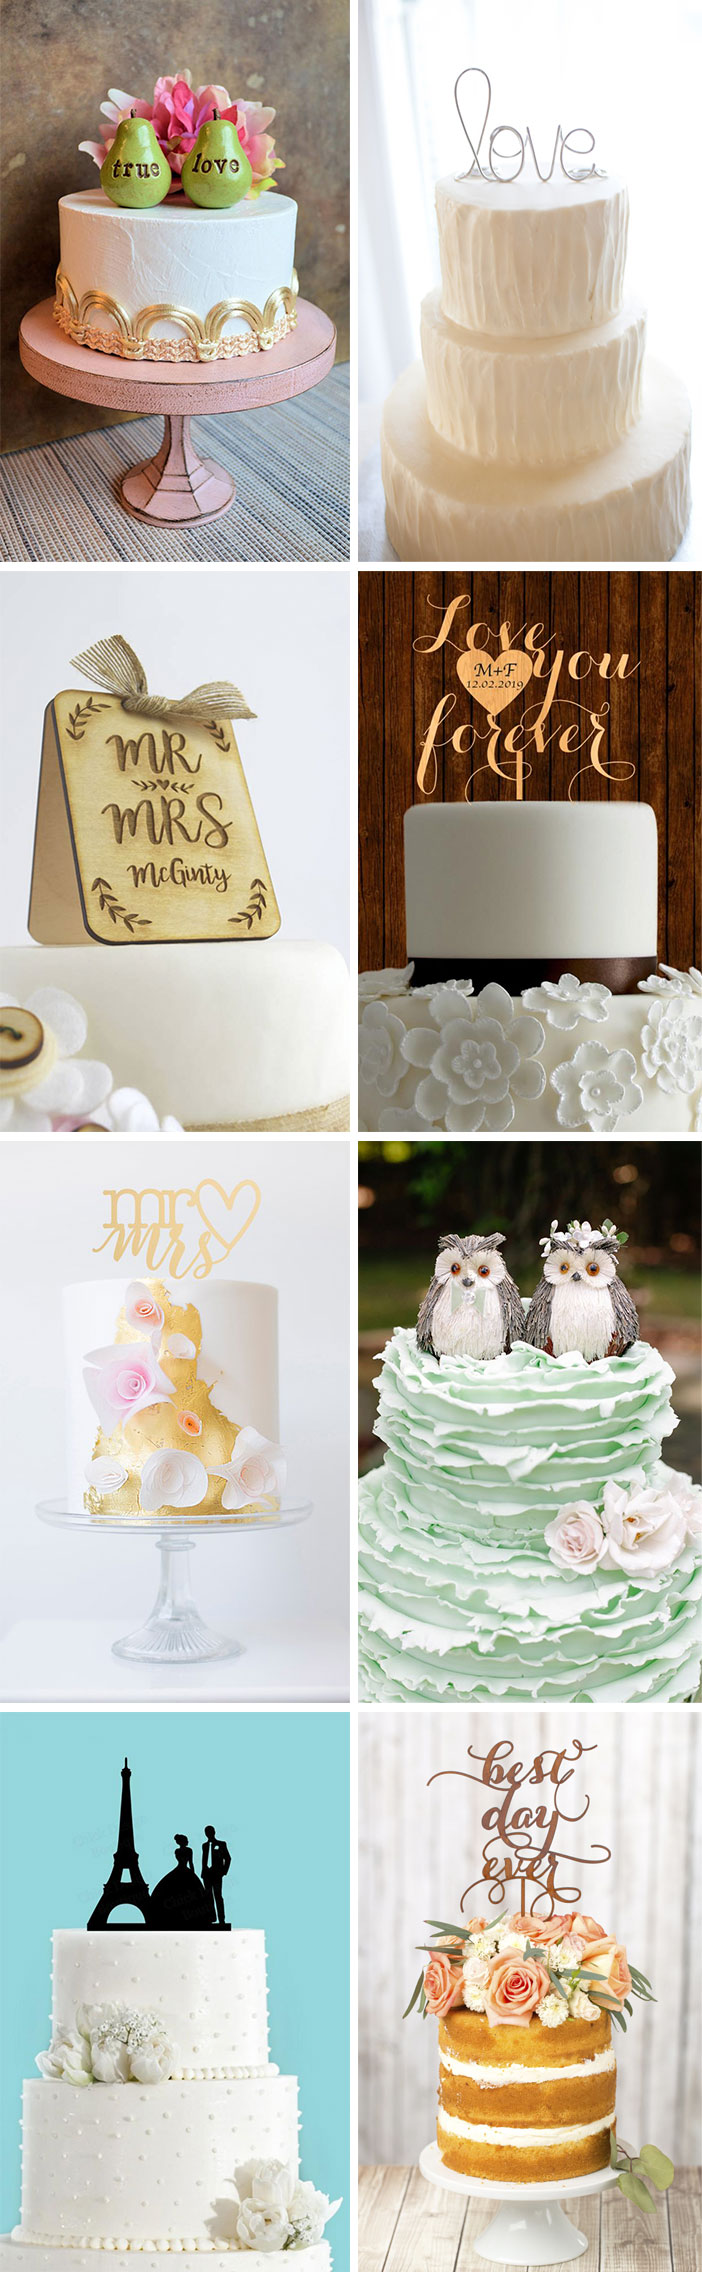 Casamento: topos de bolo criativos